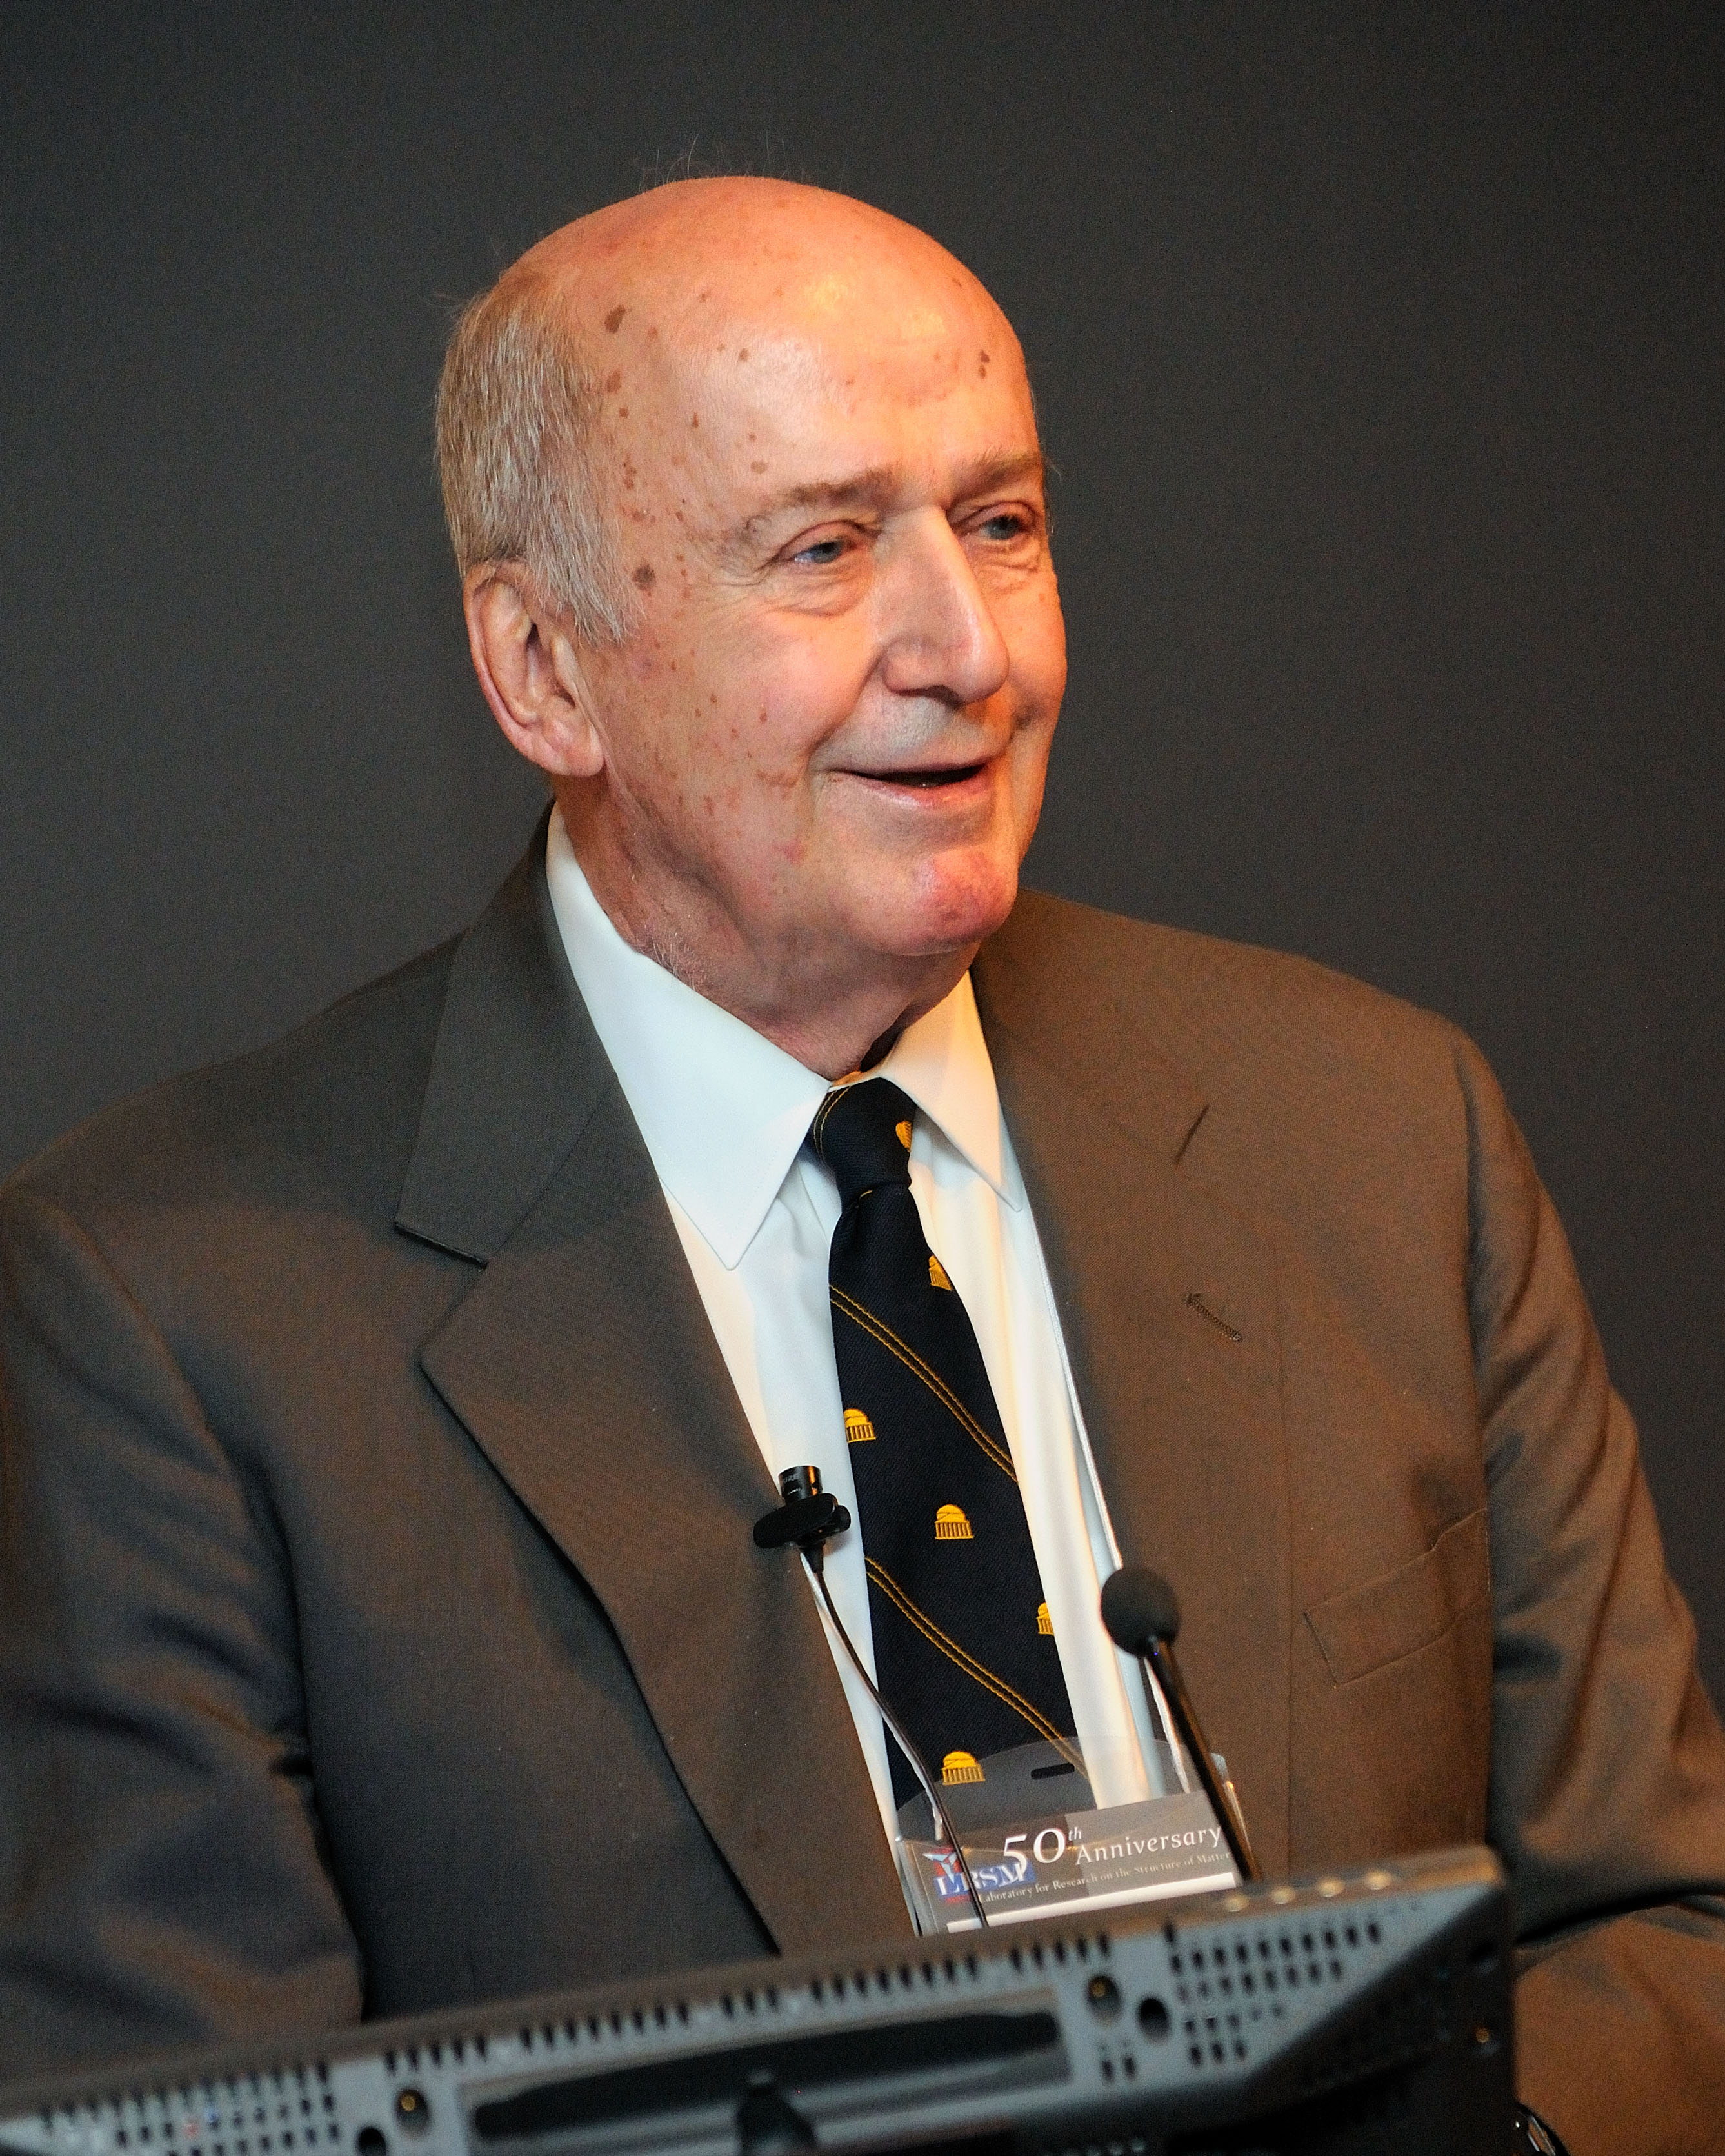 Former LRSM Director, Donald N. Langenberg, Passes, January 25, 2019